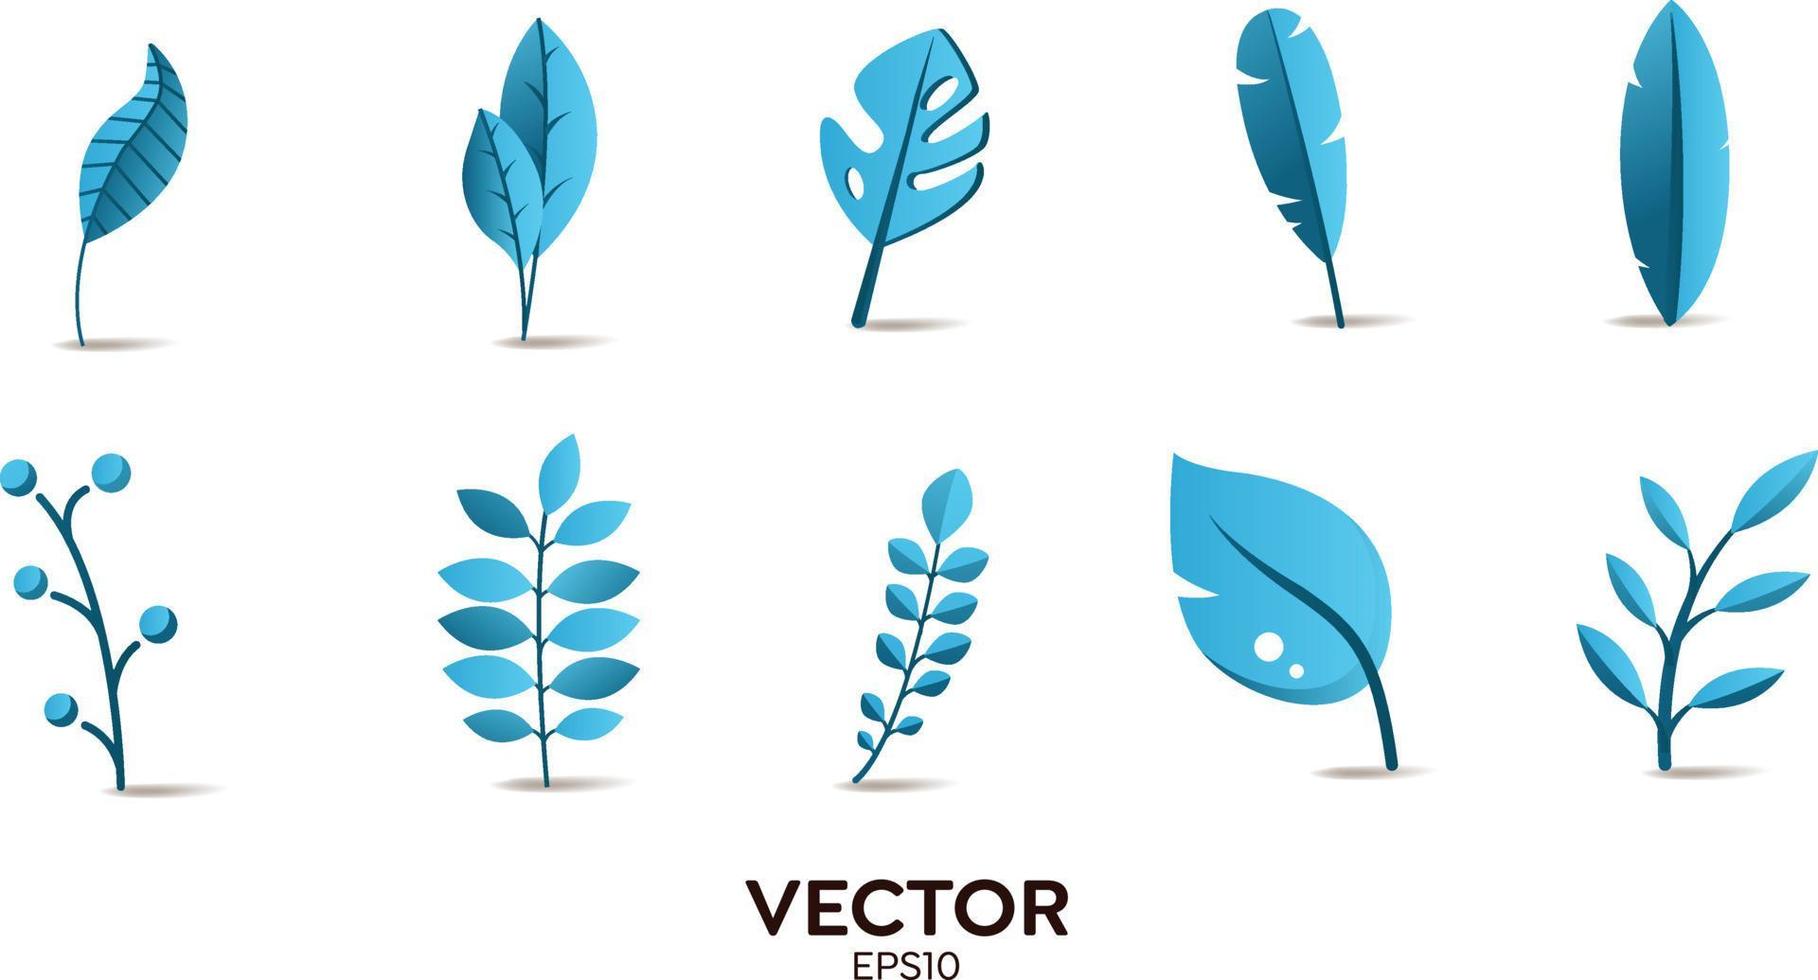 Vector designer elements set collection of blue jungle ferns, tropical eucalyptus art natural leaf herbal leaves in vector style. Decorative beauty elegant illustration for design